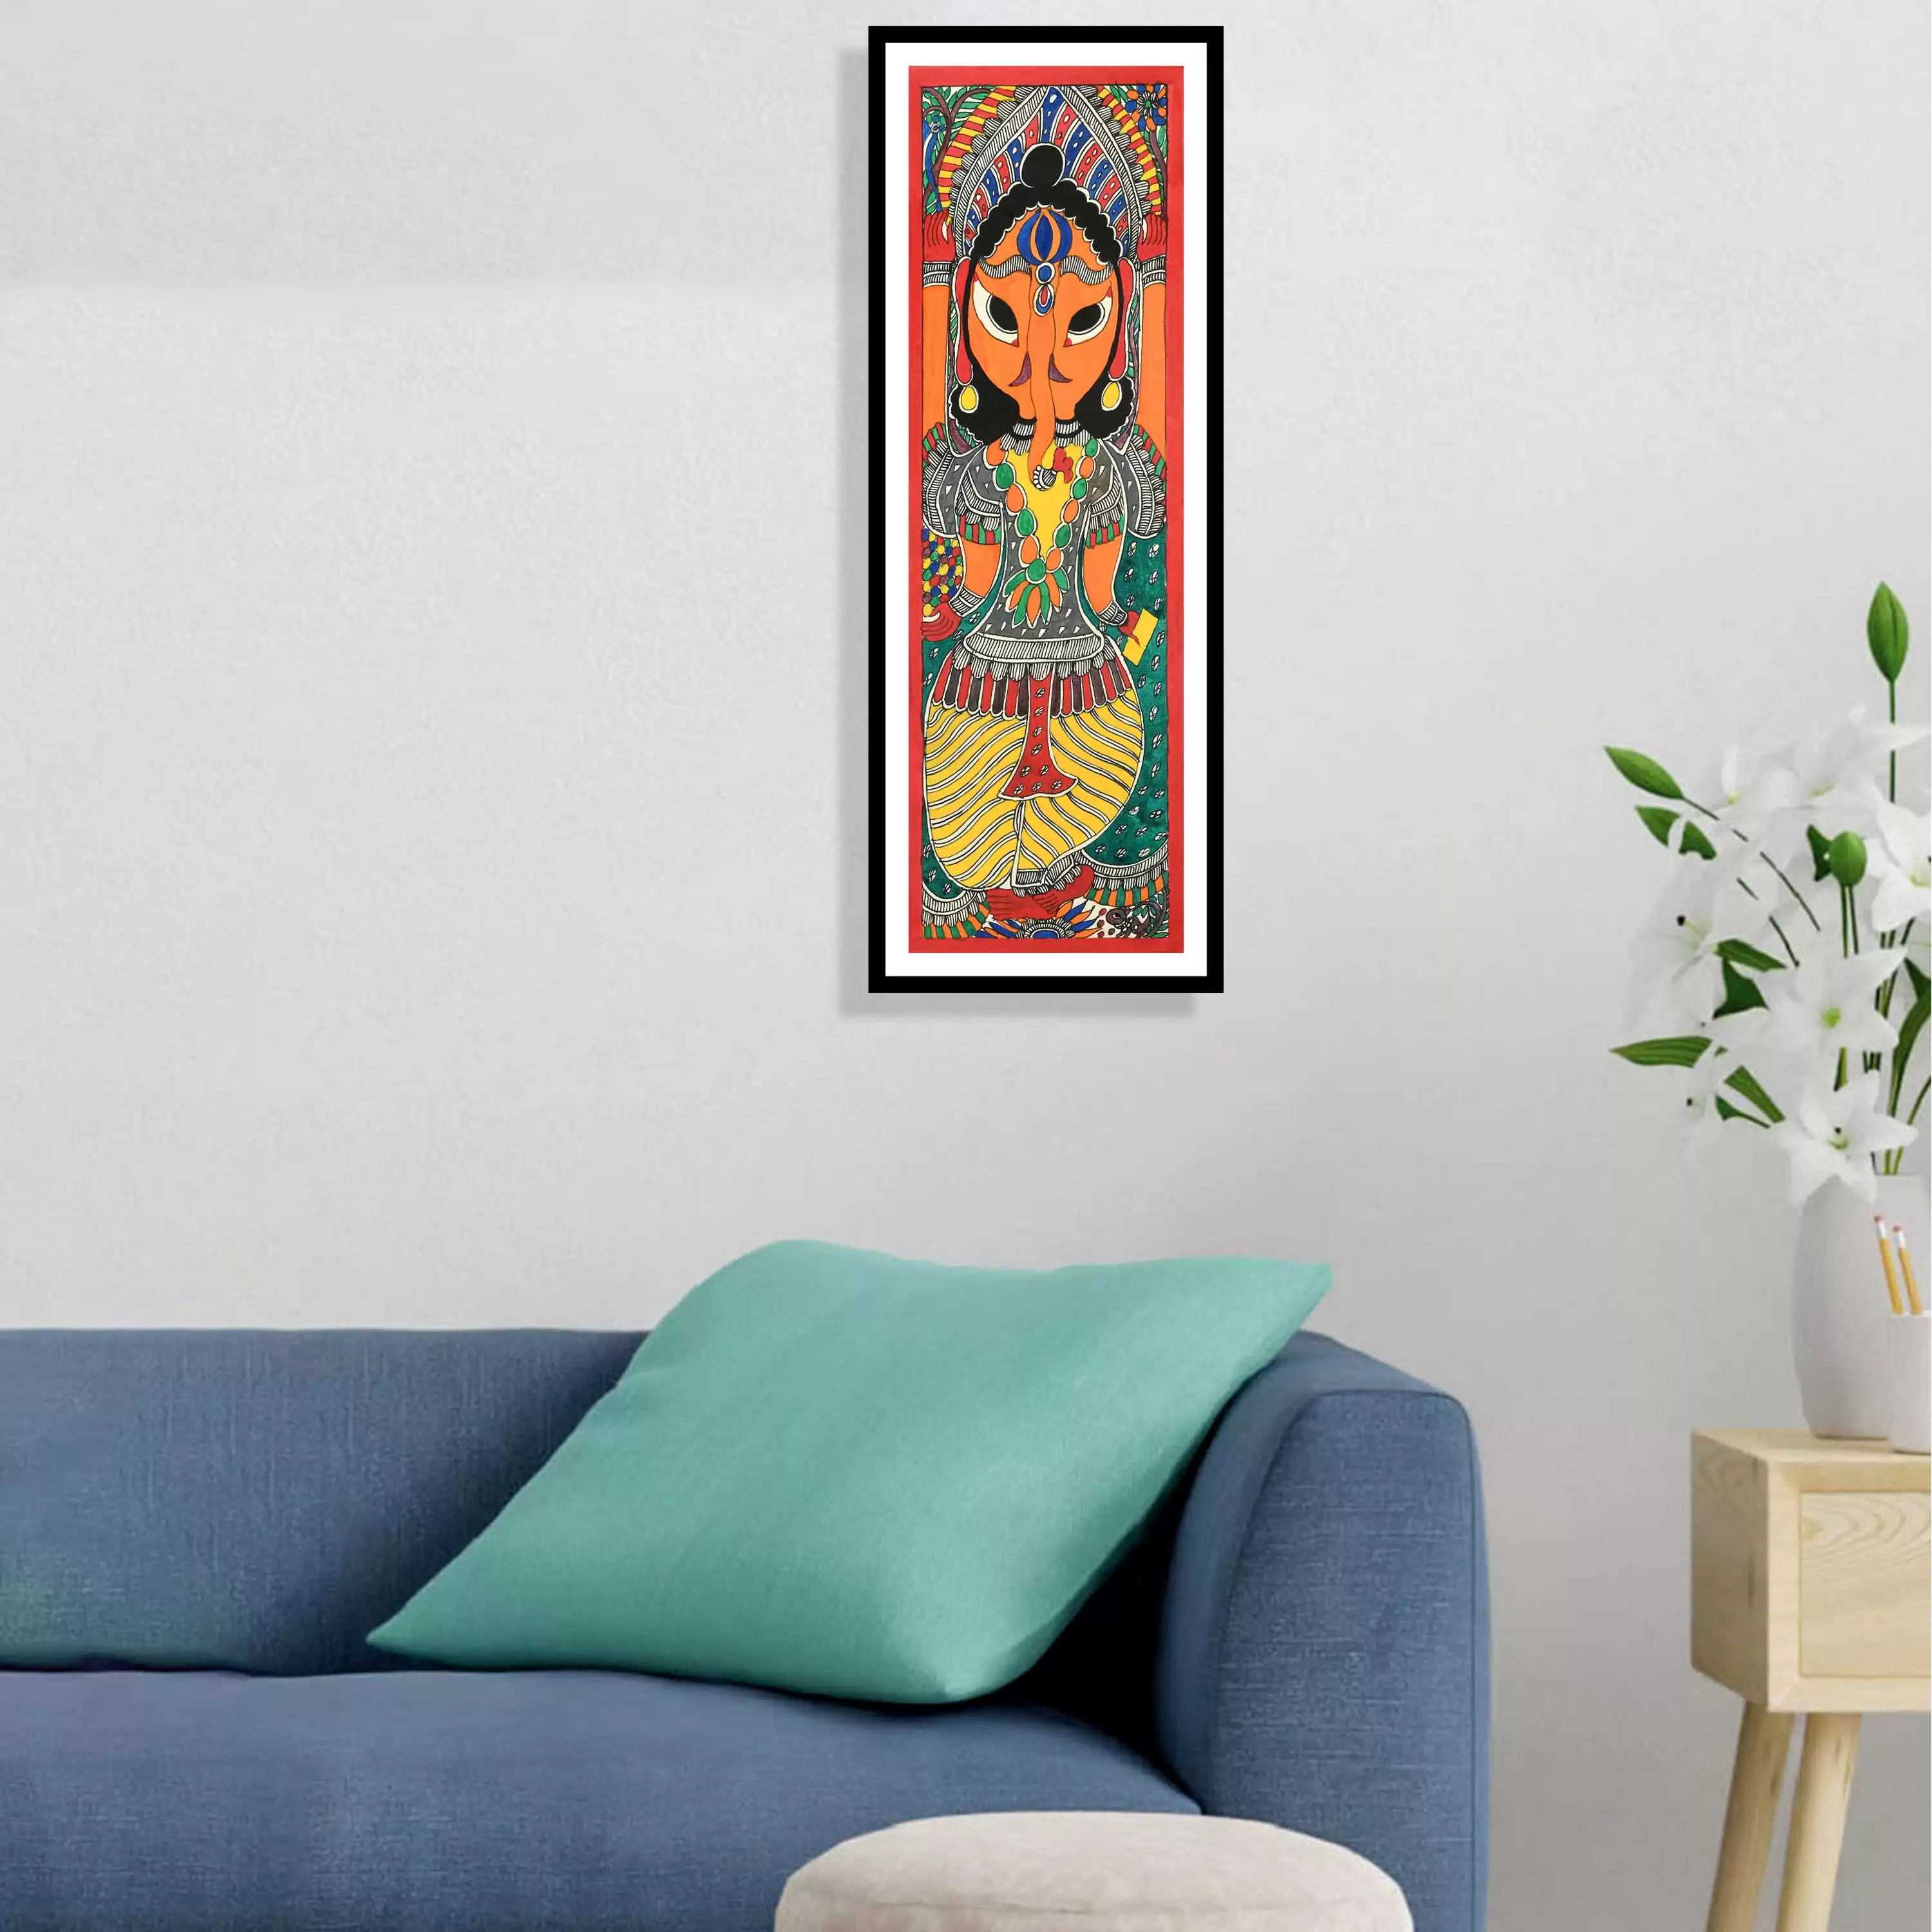 Madhubani Painting of Ganesha for Livingroom, Bedroom, Home & Office Wall Art Decor